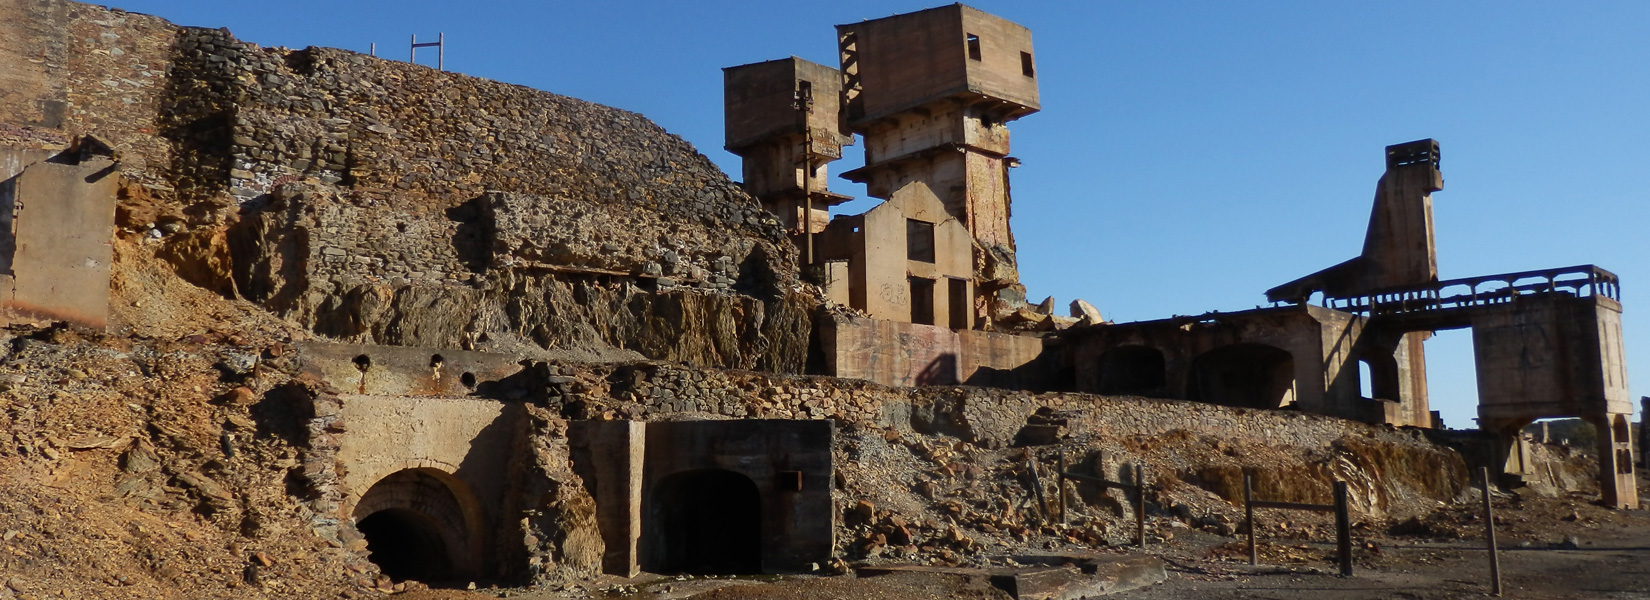 La mine abandonnée d'Achada do Gamo 